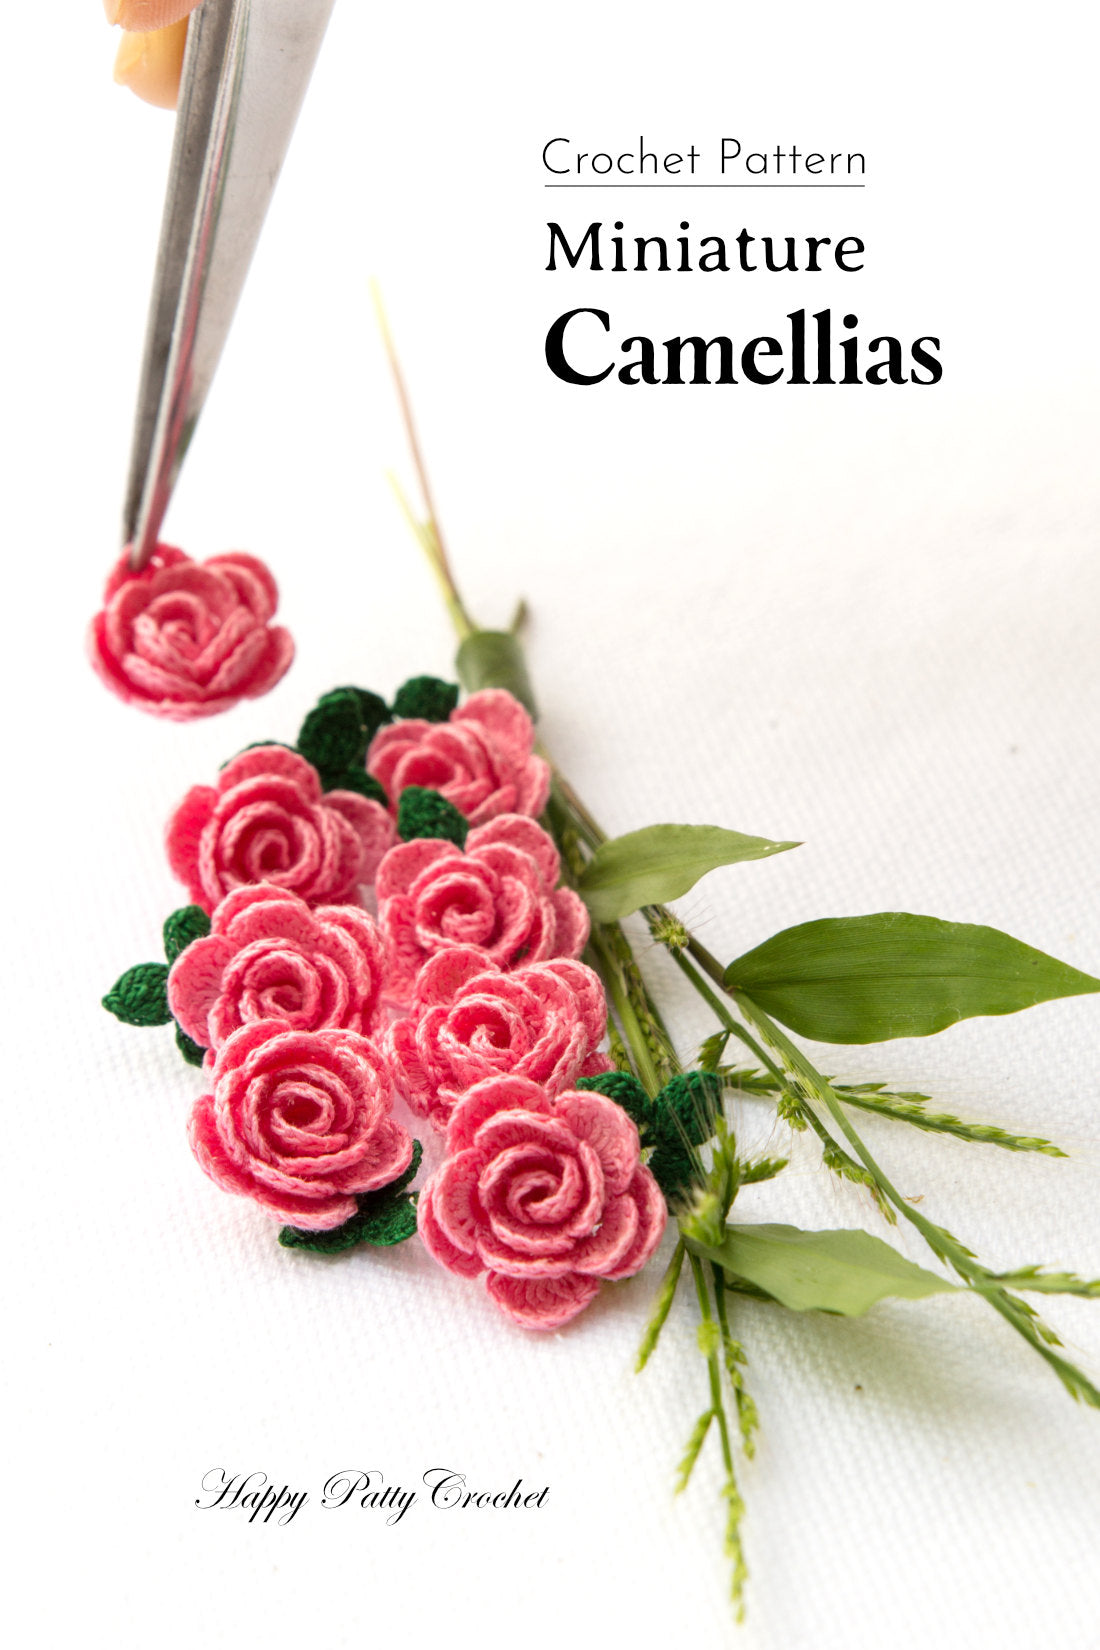 Mini Camellia